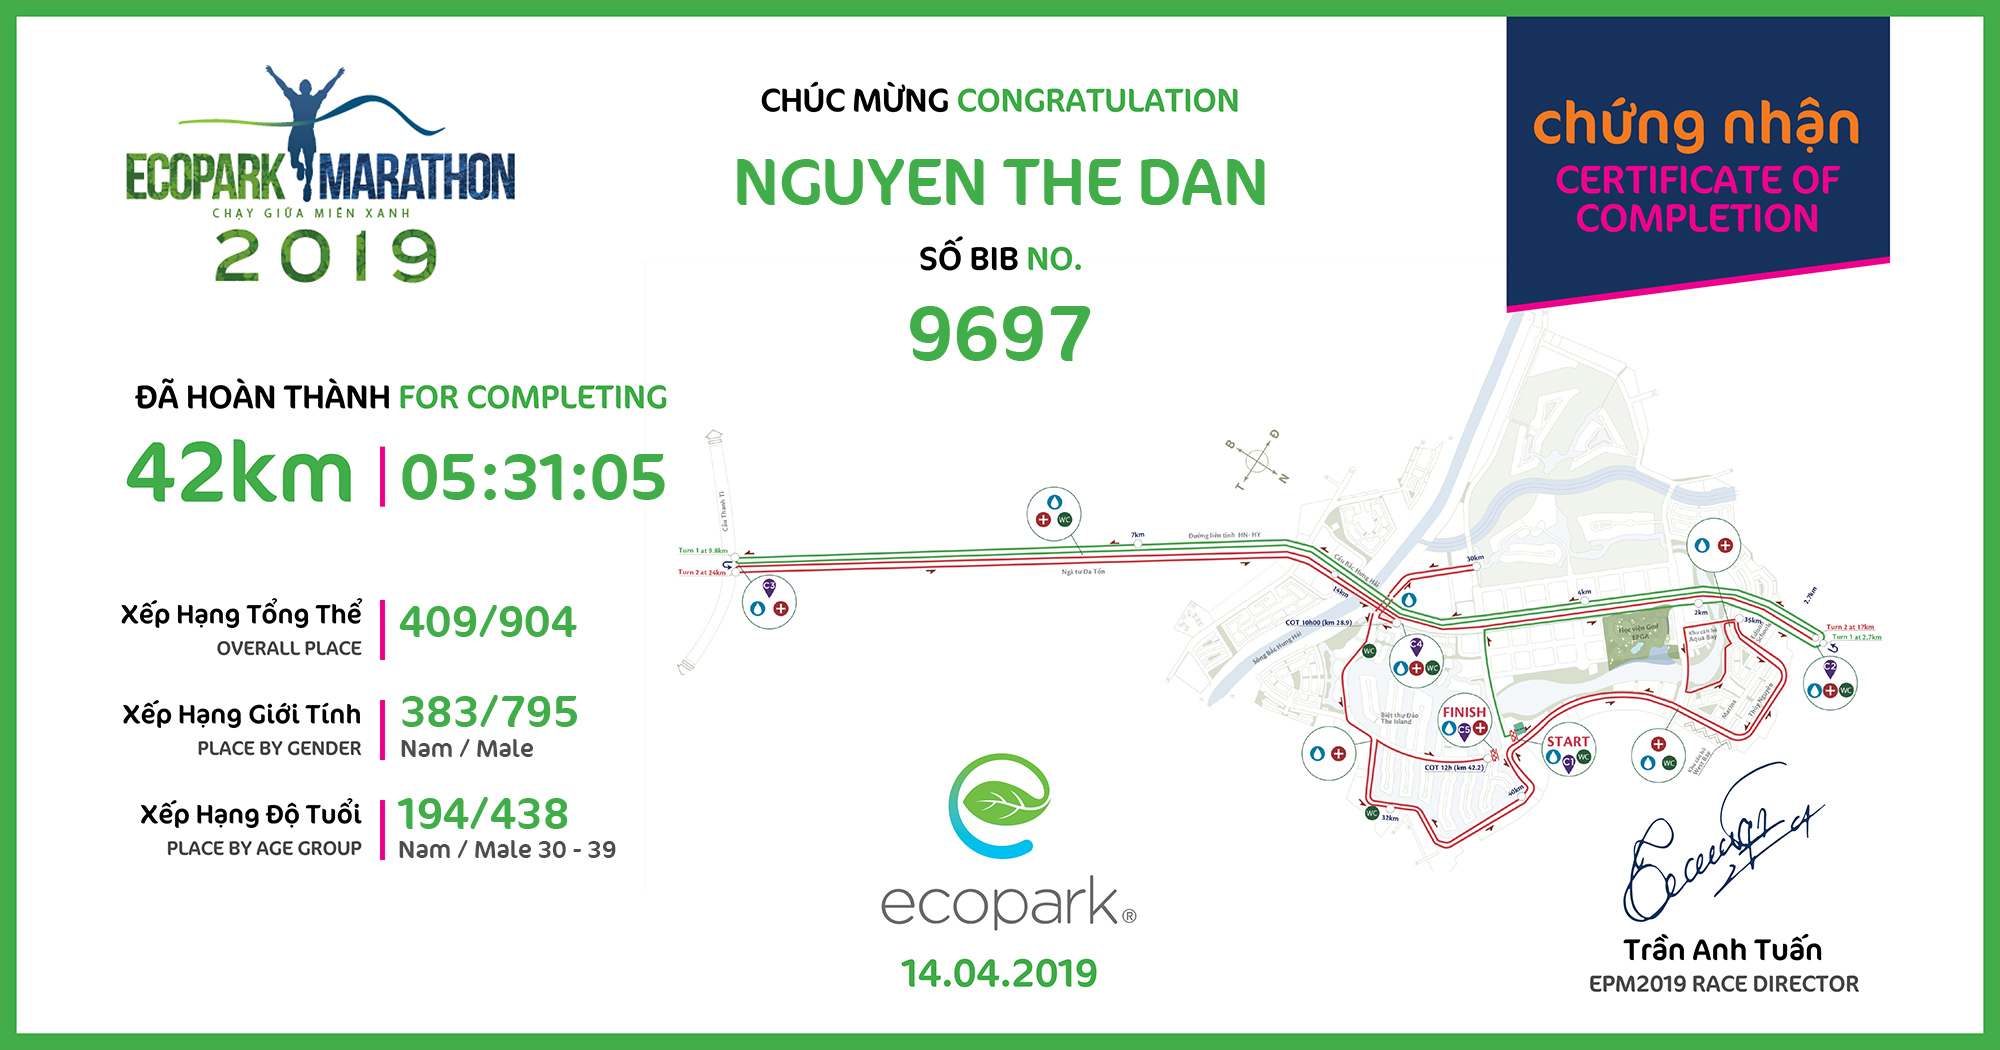 9697 - Nguyen The Dan